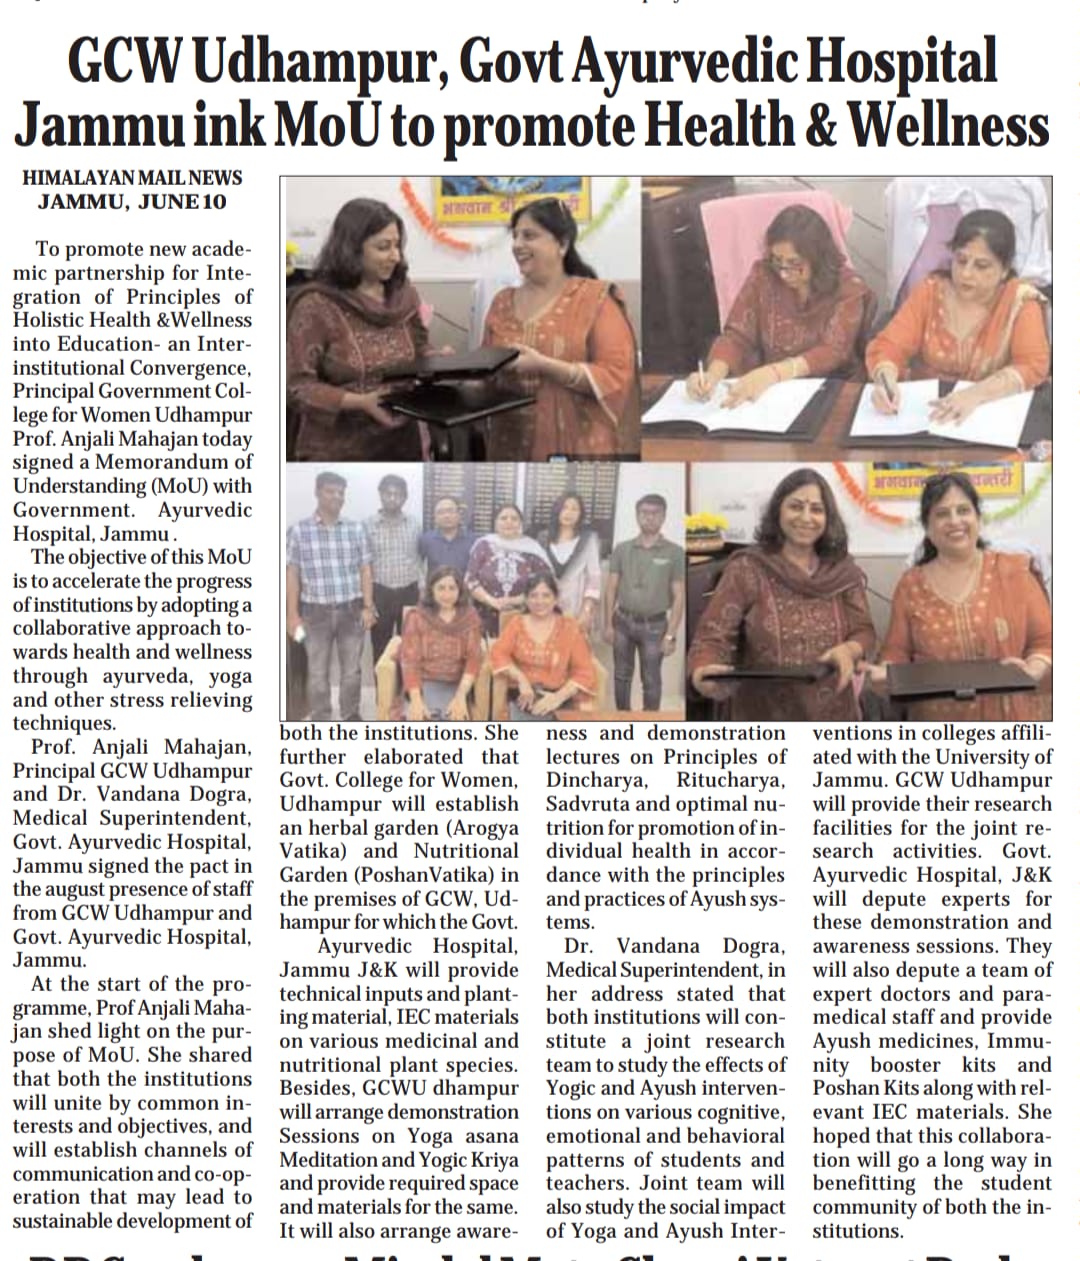  MoU to promote Health & Wellness